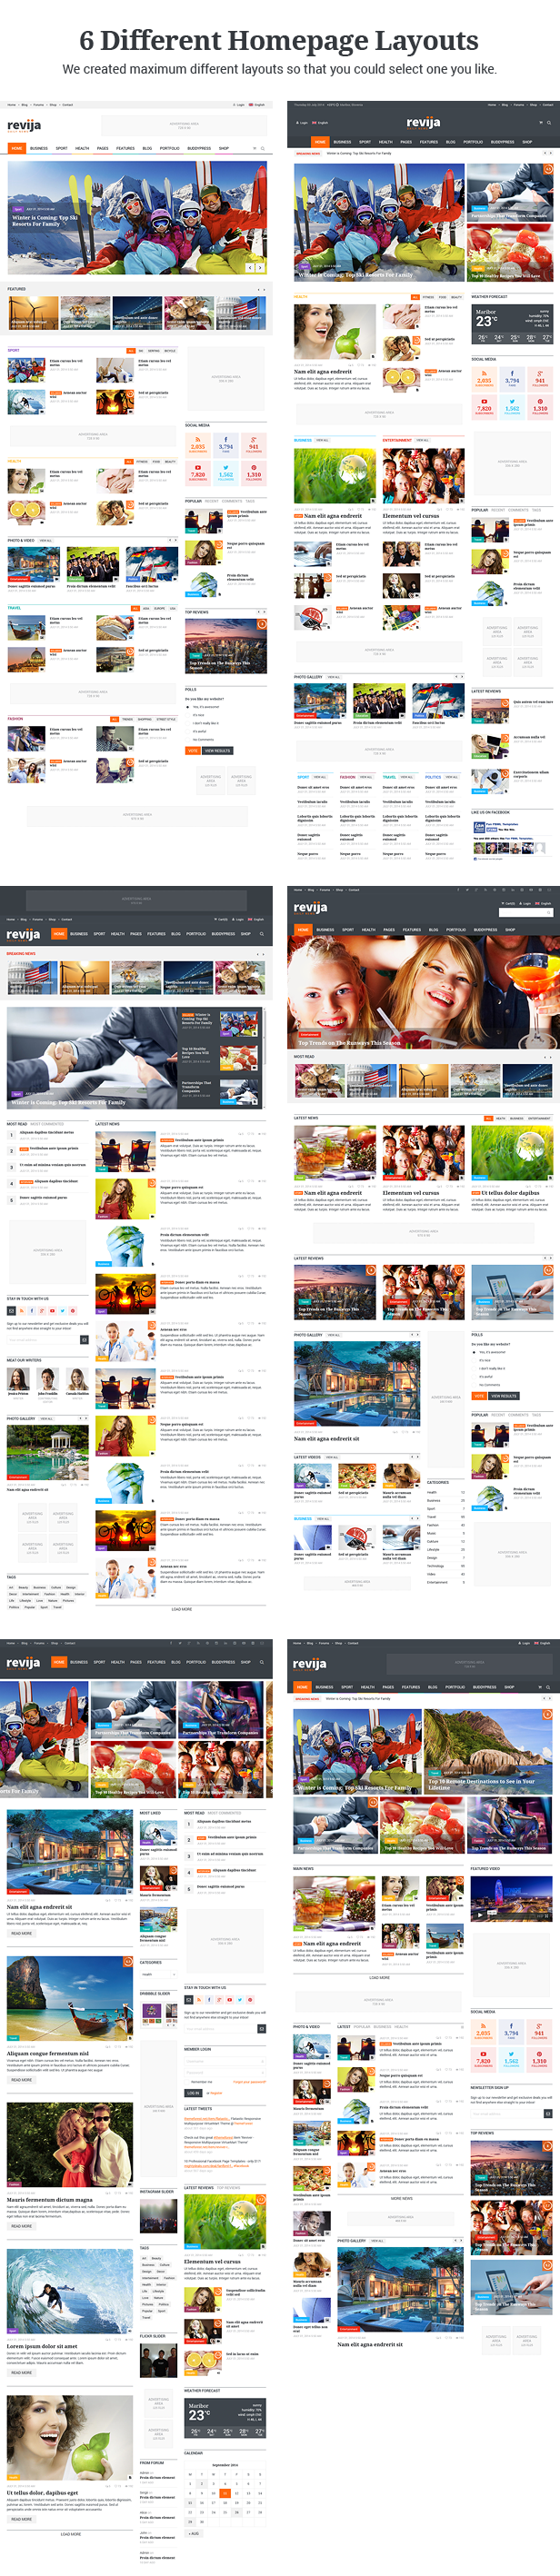 Revija - Premium Blog/Magazine HTML Template - 4